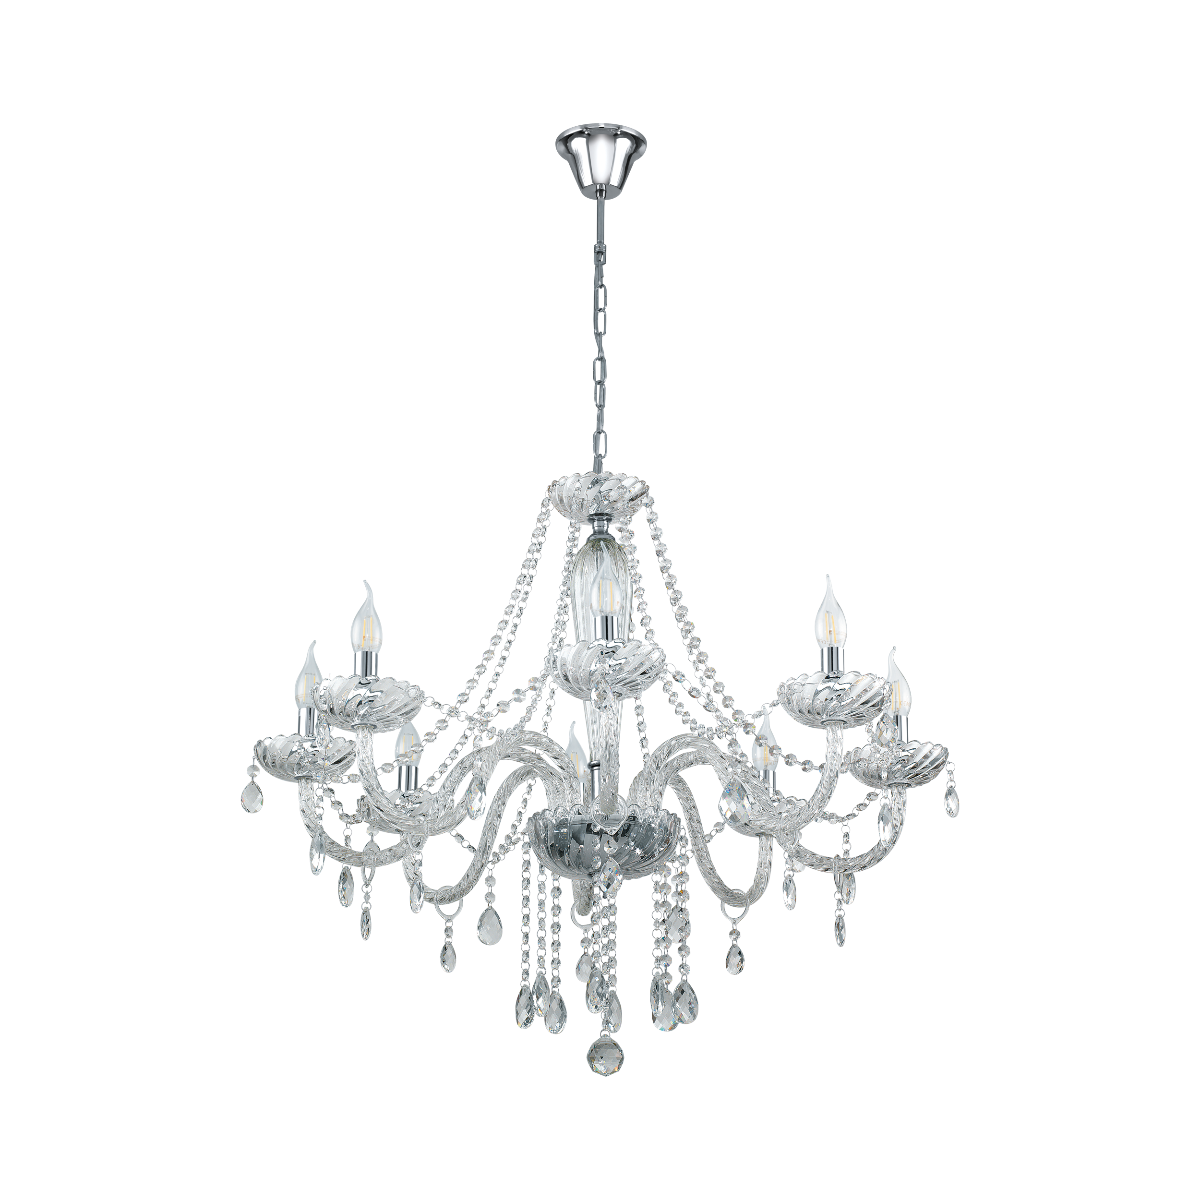 BASILANO 1 Glass Chandeliers EGLO 39101 chandelier flame lamp